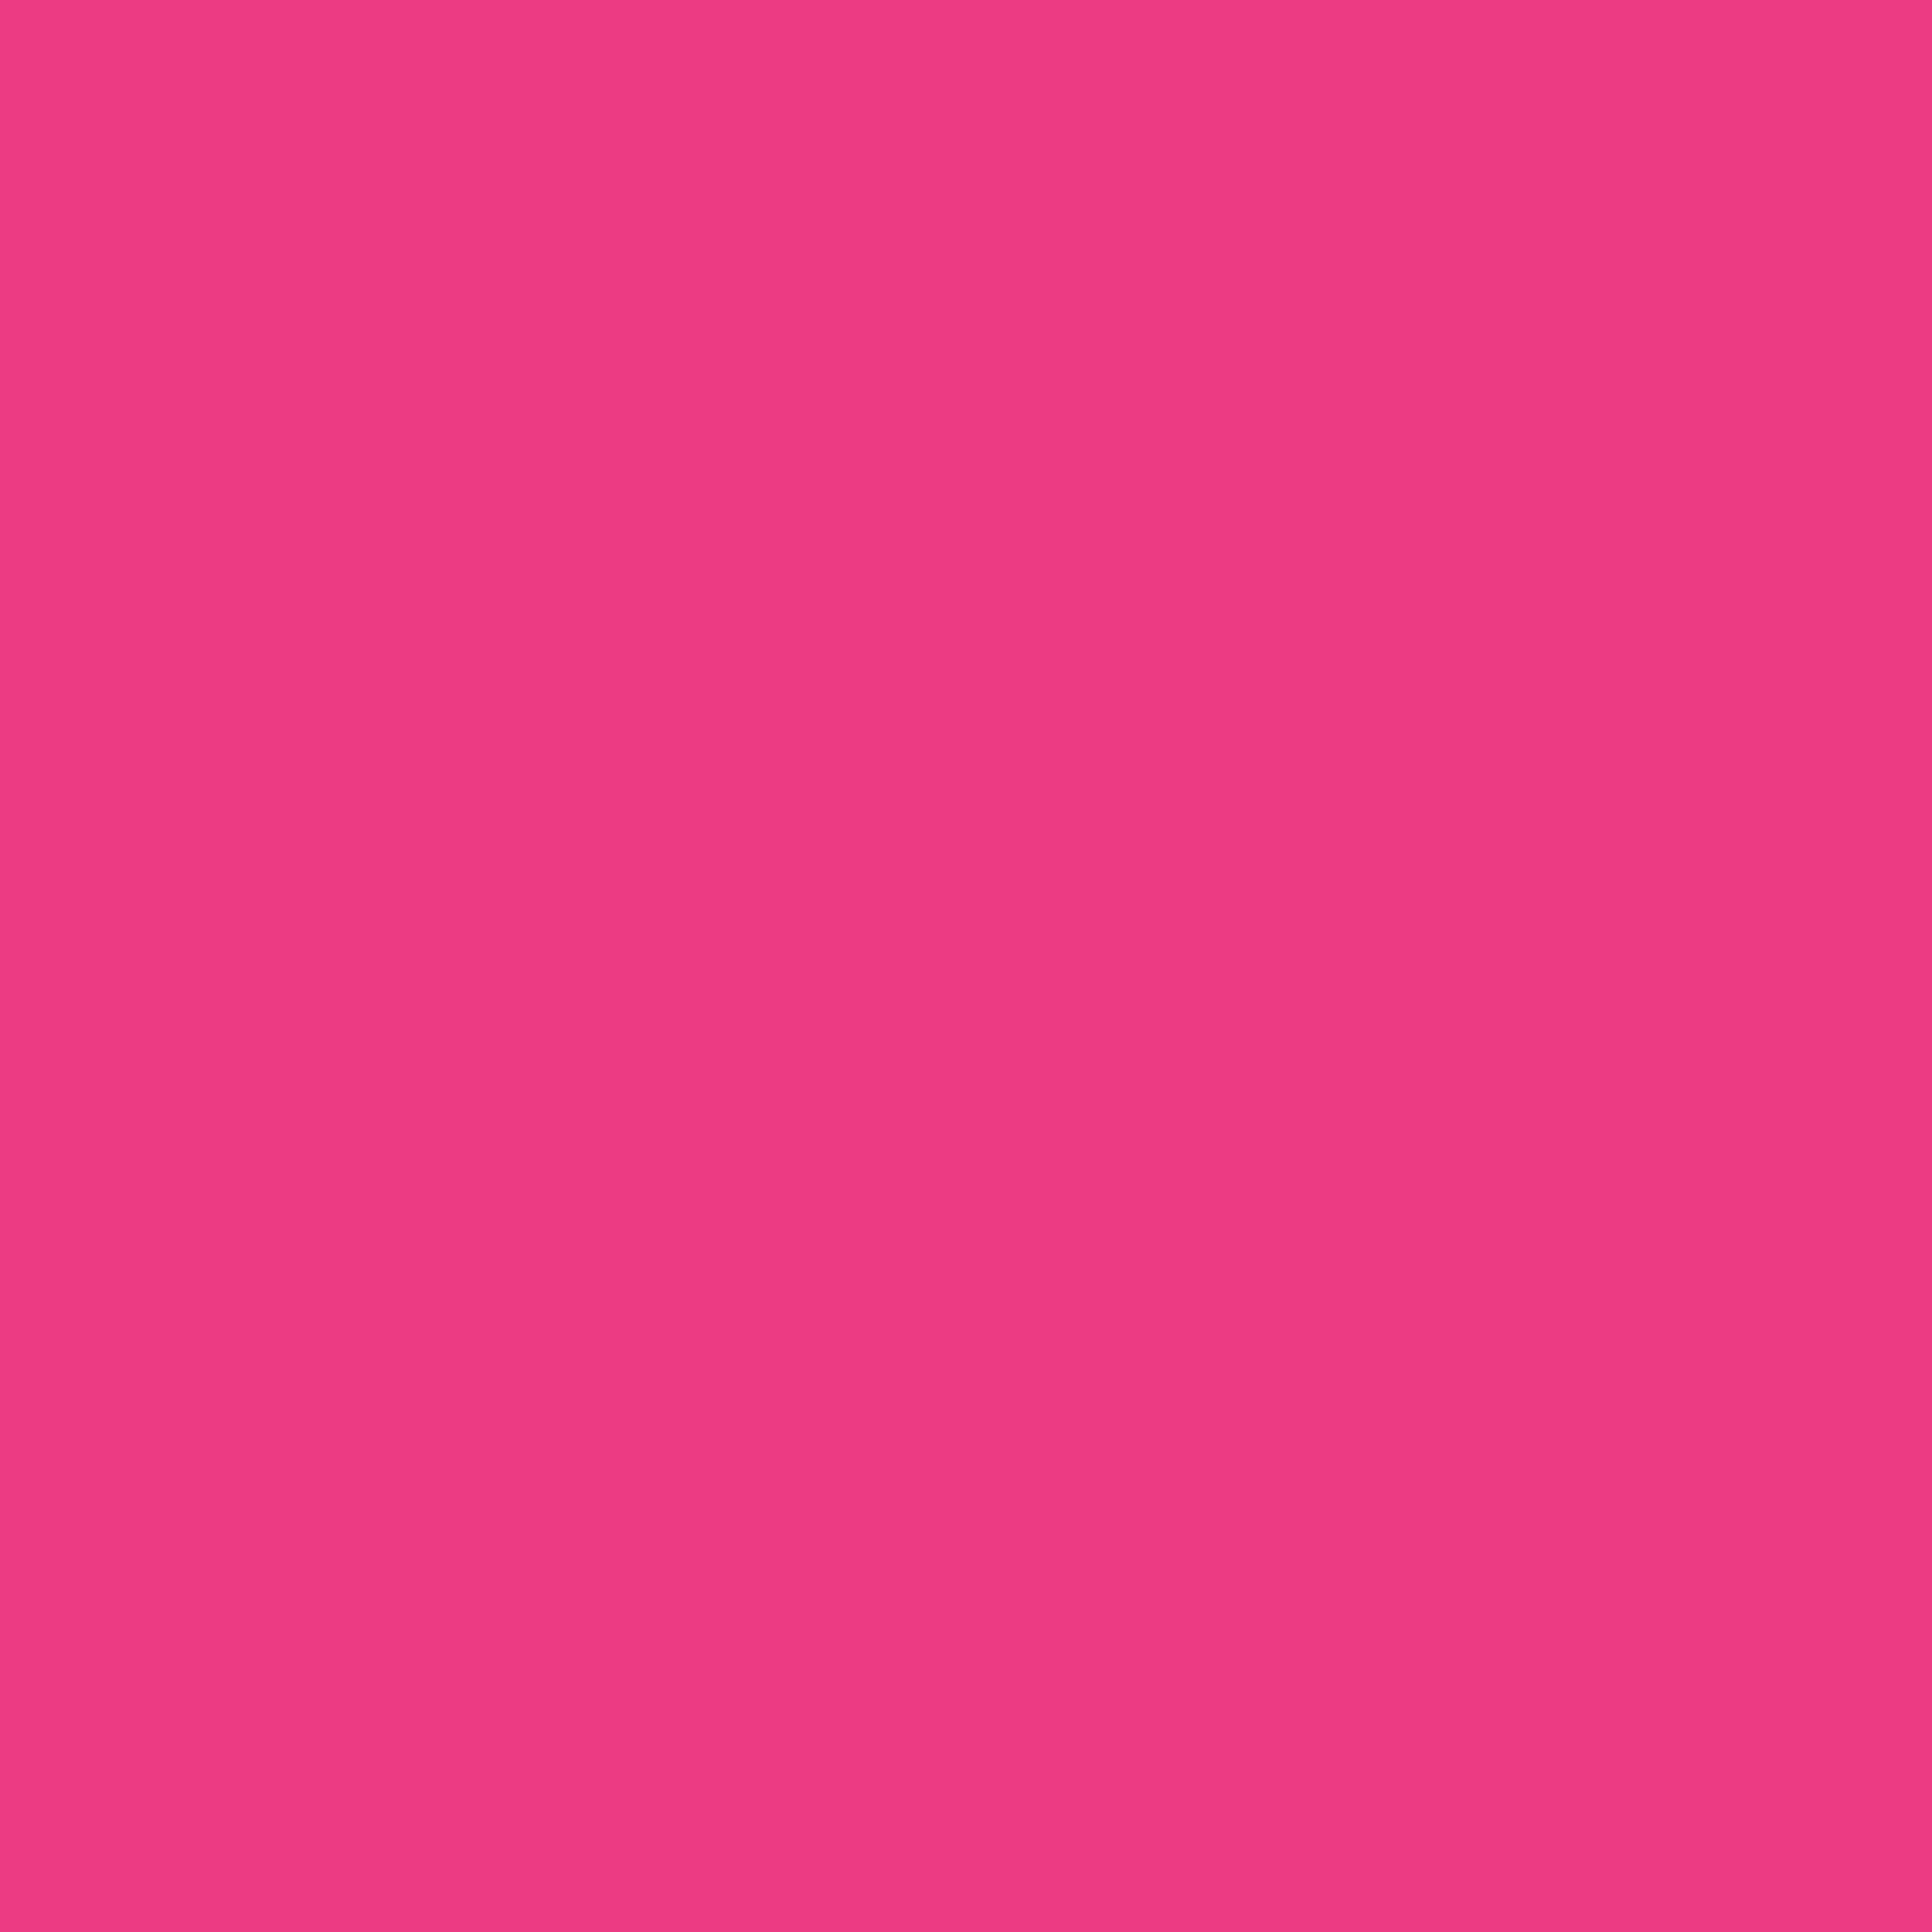 3600x3600 Cerise Pink Solid Color Background